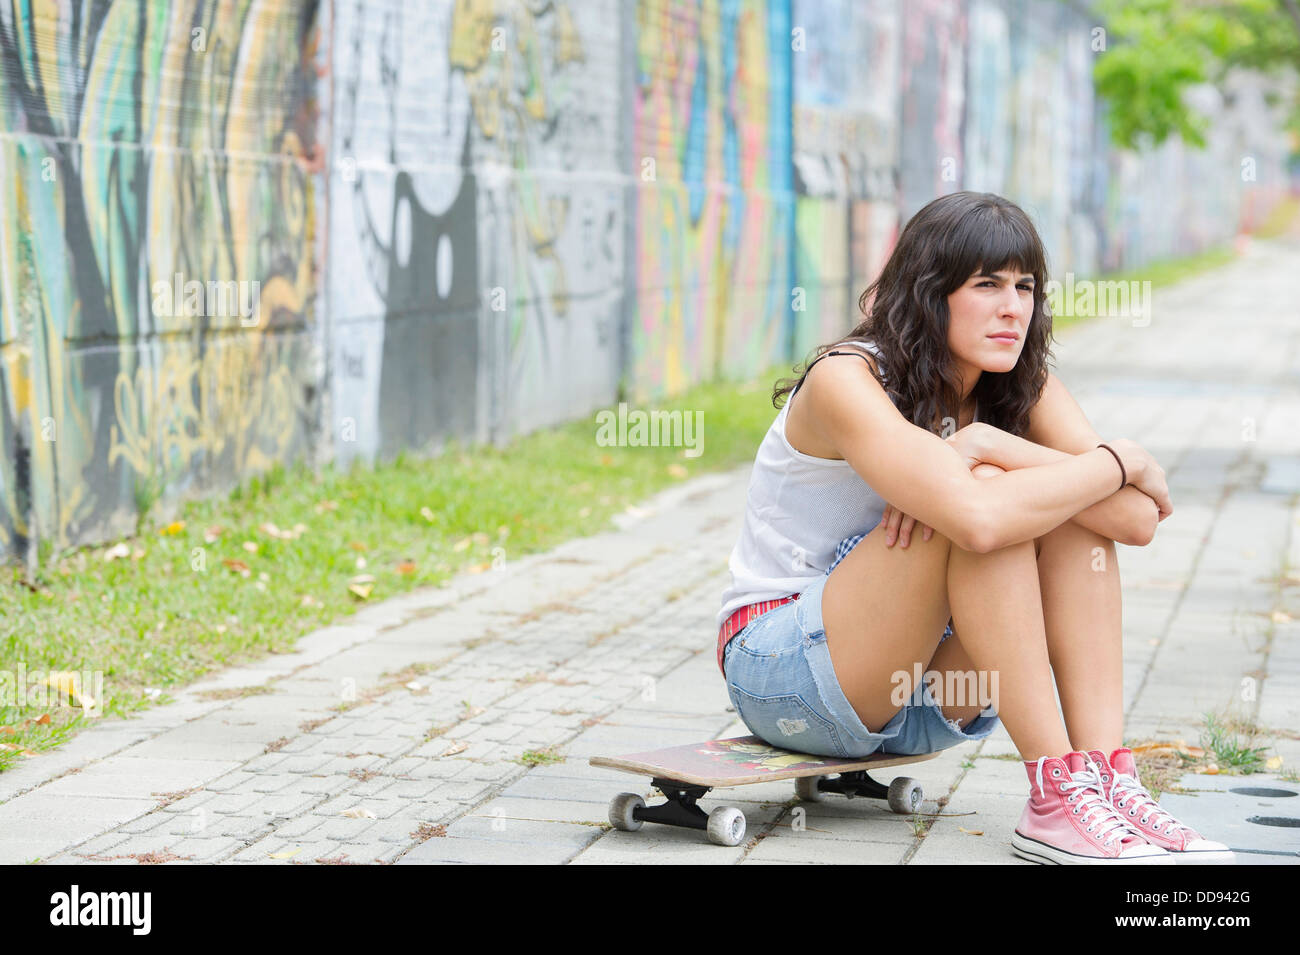 Hispanic woman sitting on skateboard Stock Photo